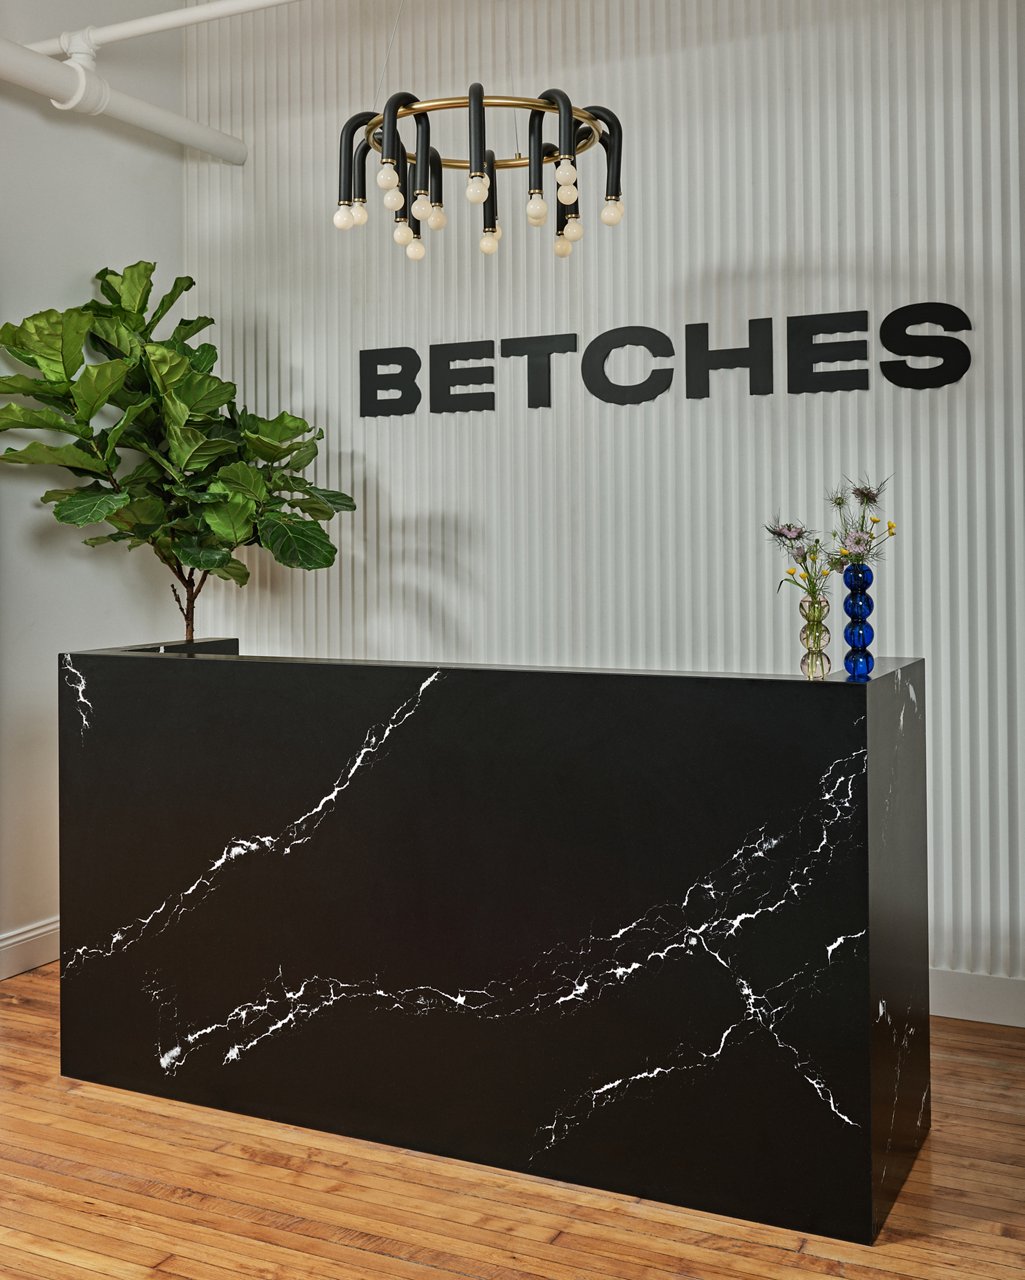 Cambria Blackbrook Matte and White Cliff quartz front desk in Betches headquarters lobby